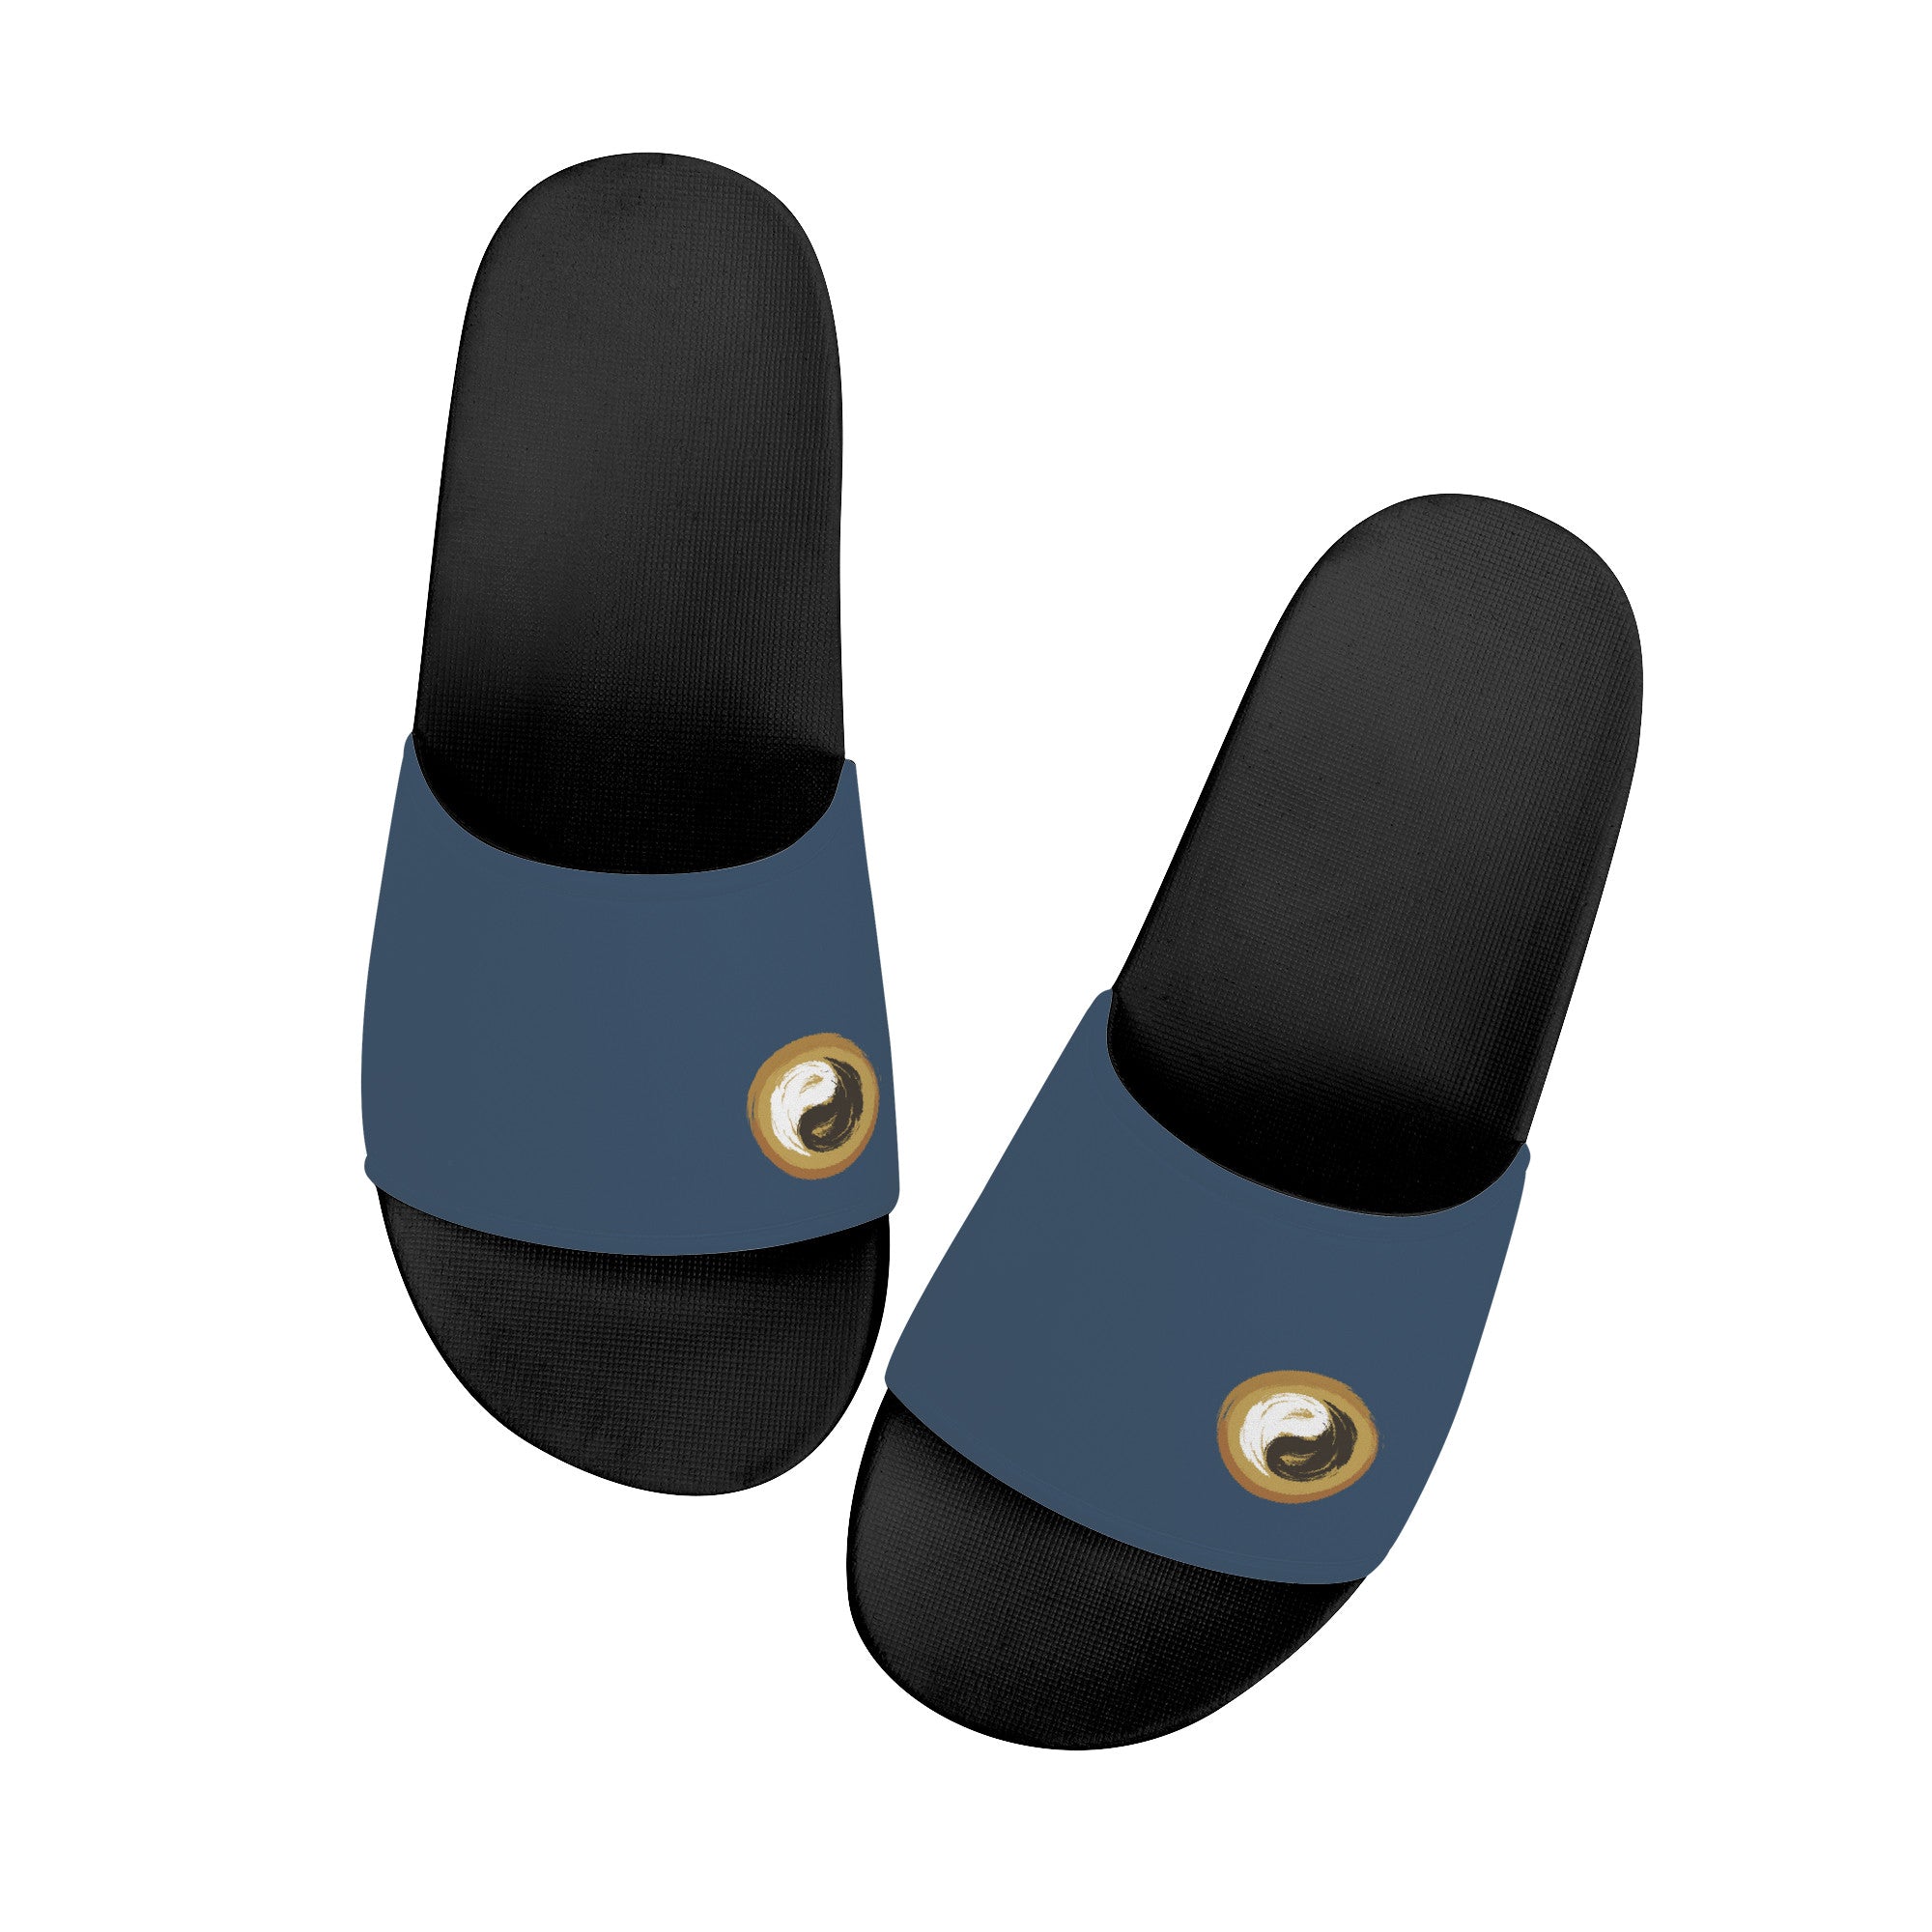 Yoga Sandals - Sanuk flip flops -  open-toe style sandals